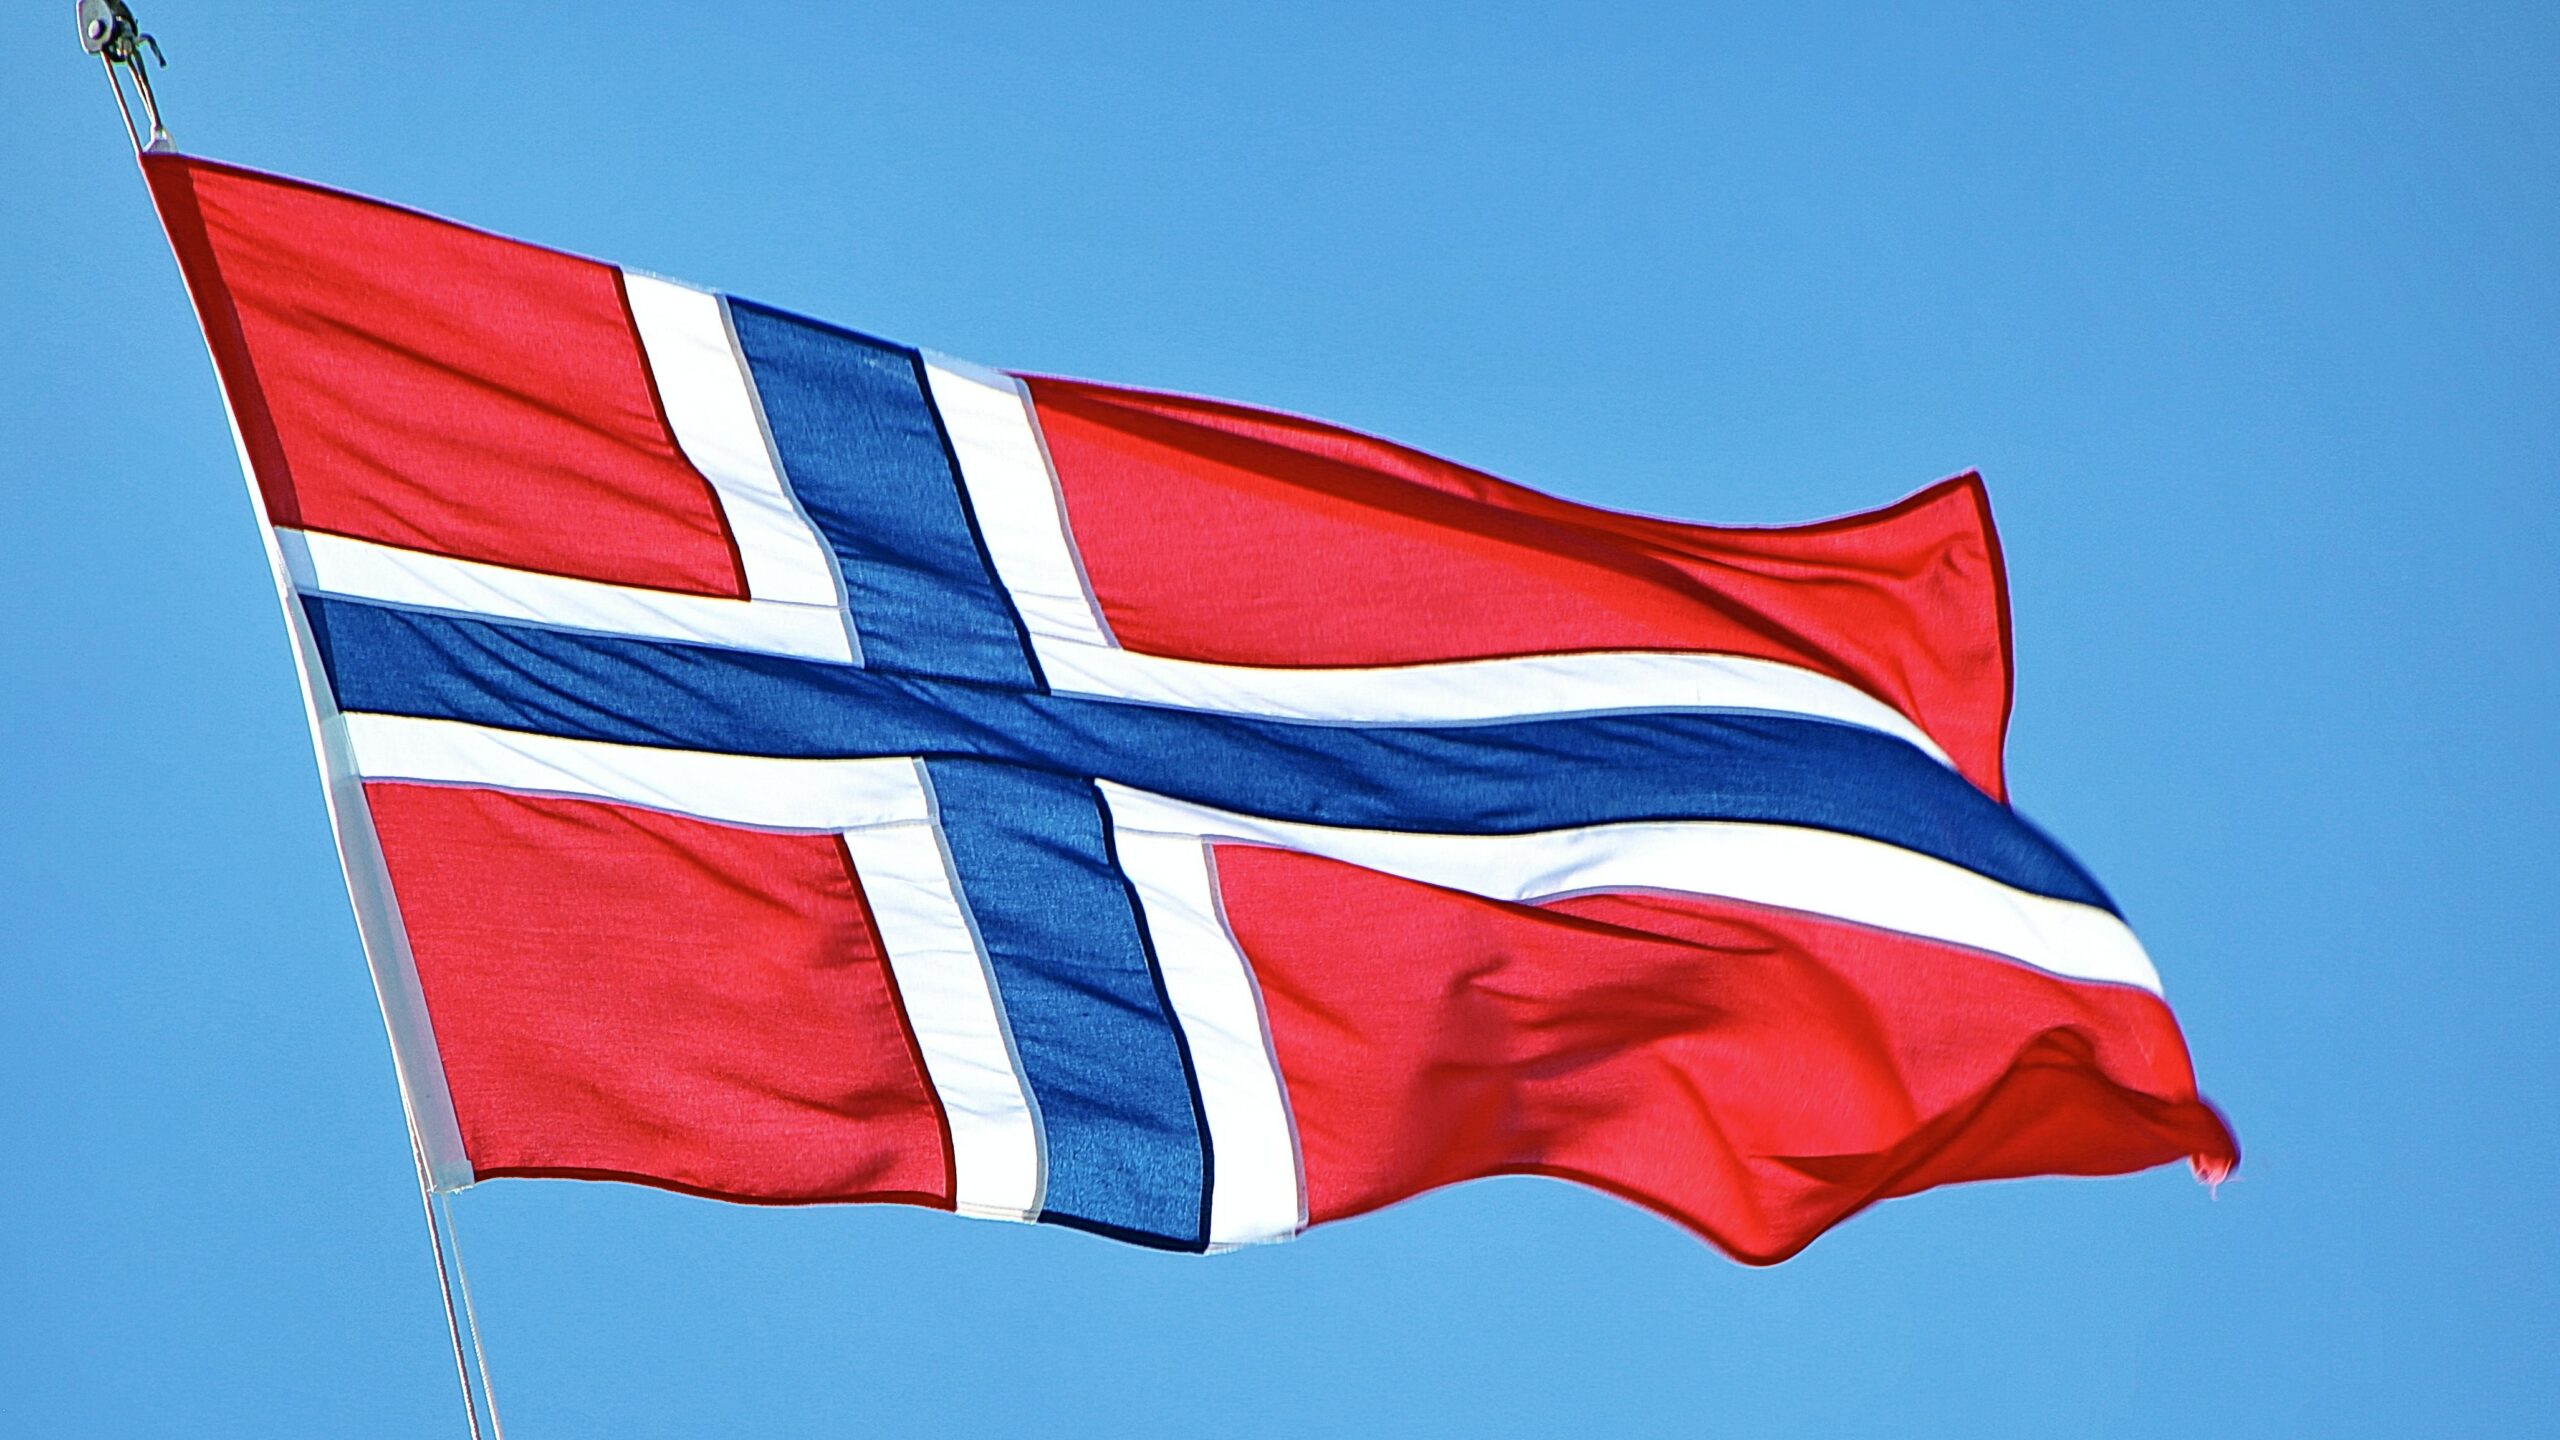 steagul-norvegiei-sursa-foto-unsplash.com